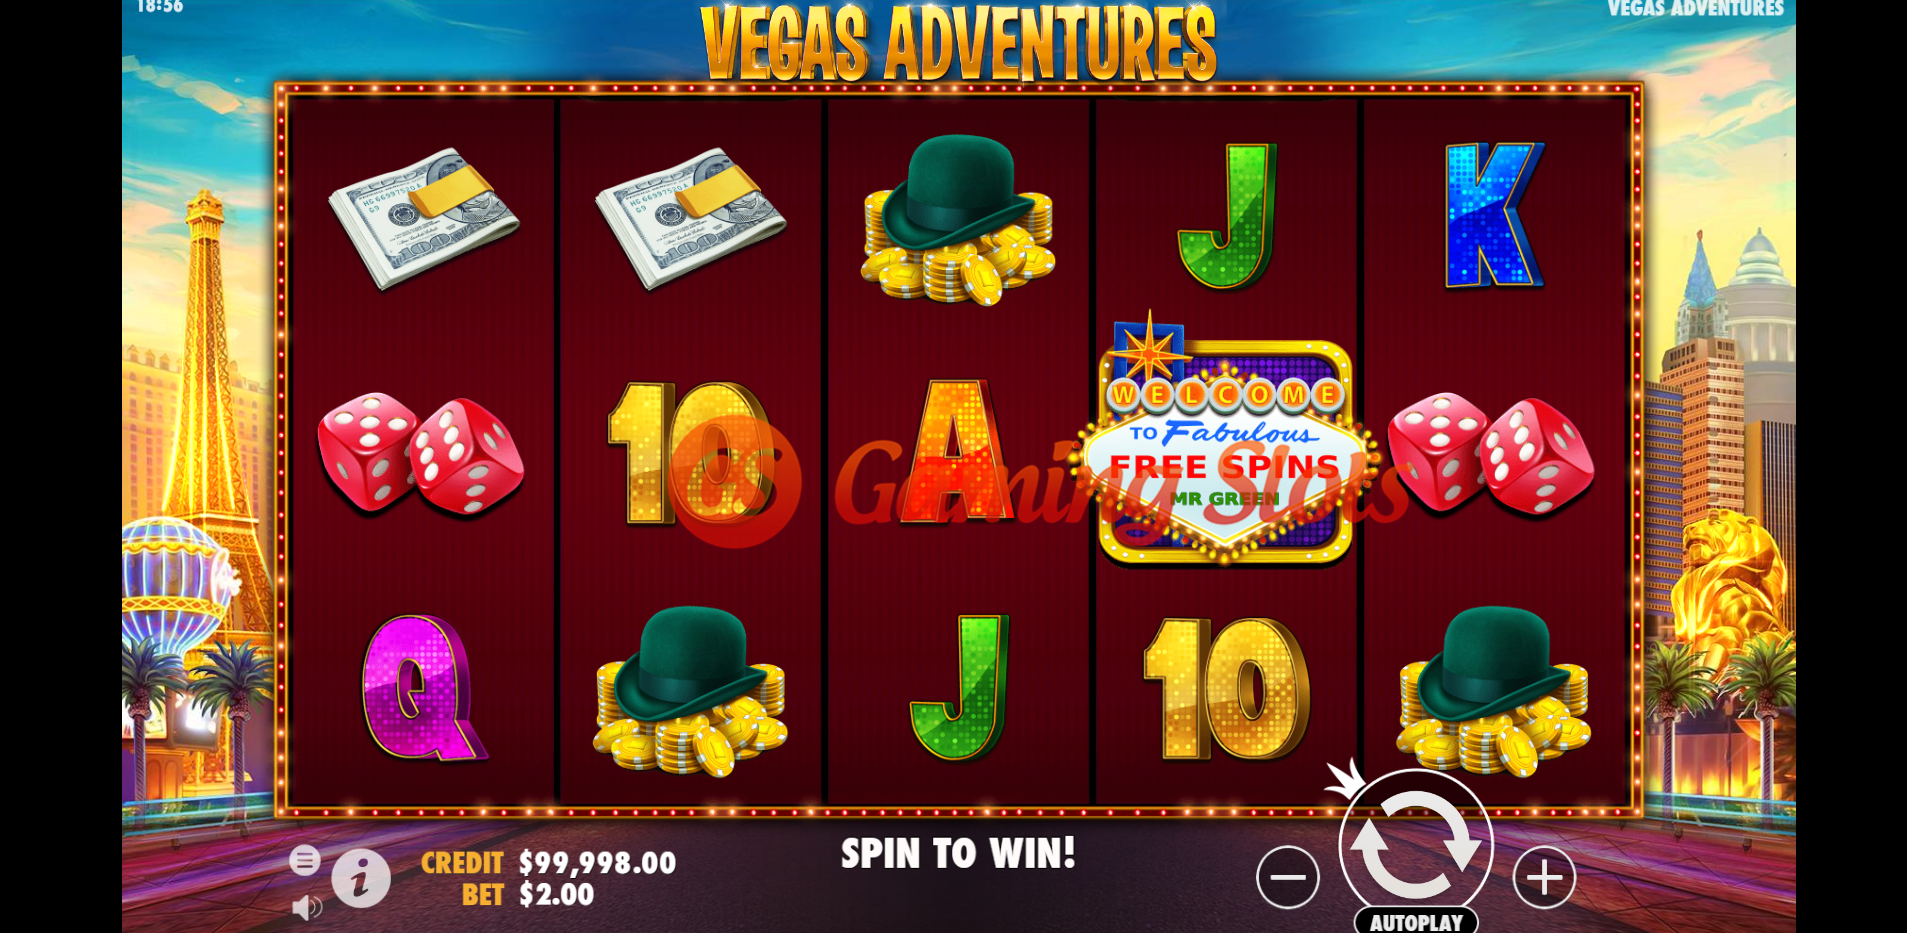 Base Game for Vegas Adventures slot by Pragmatic Play